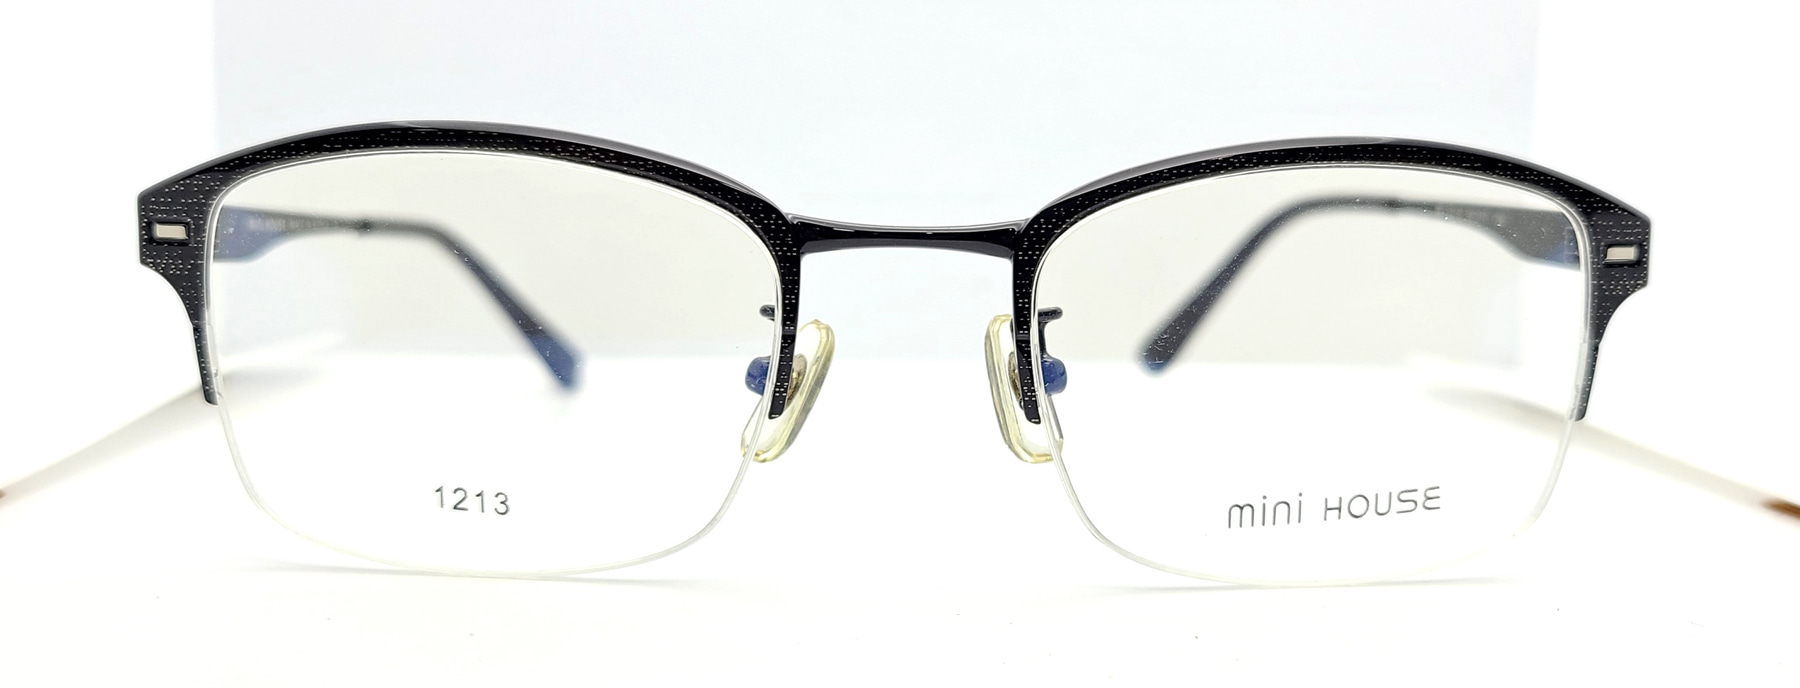 MINIHOUSE M-1213, Korean glasses, sunglasses, eyeglasses, glasses